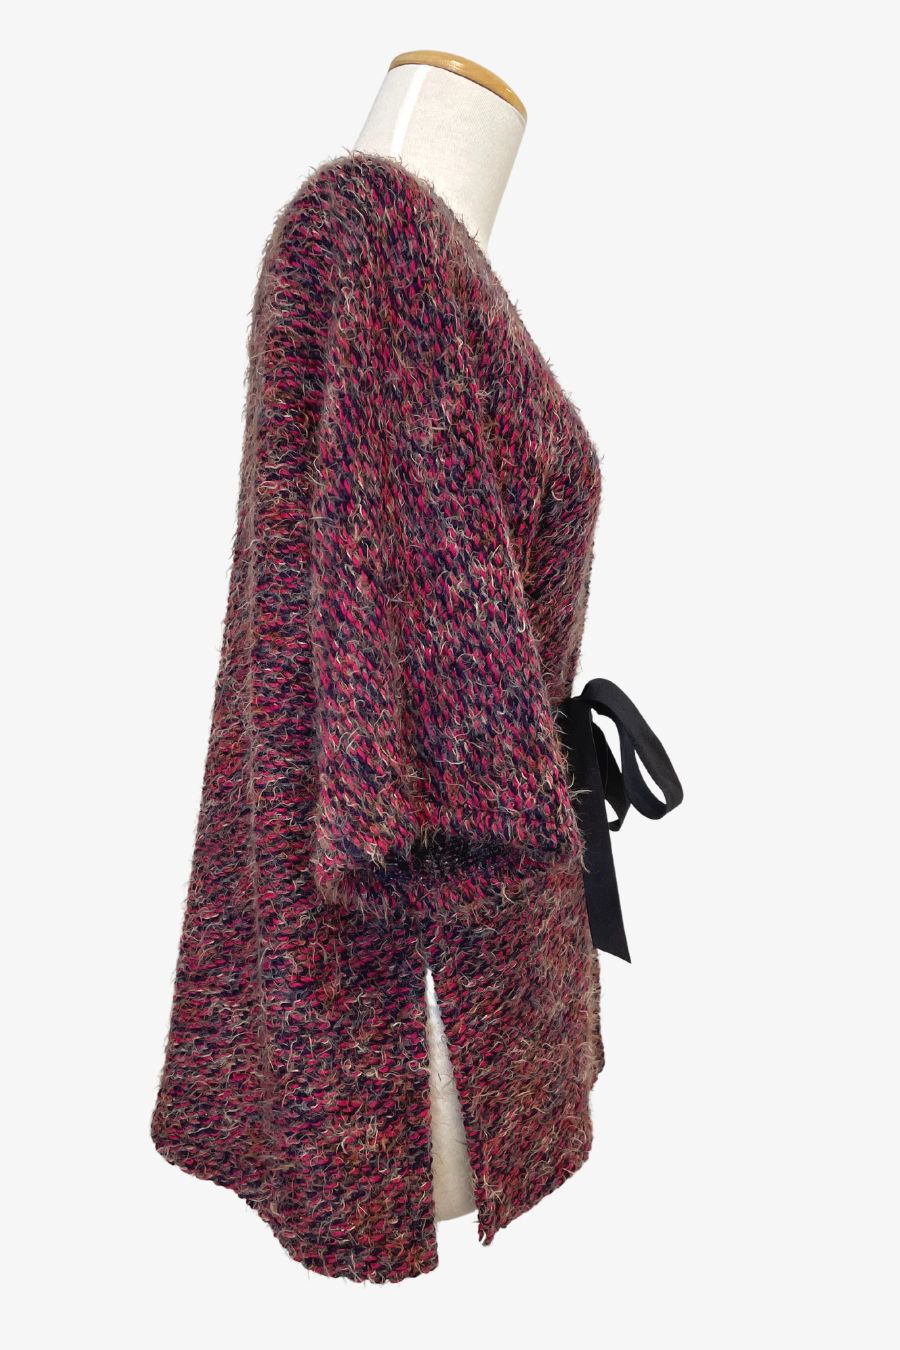 Kit Cardigan in Rosa Knit